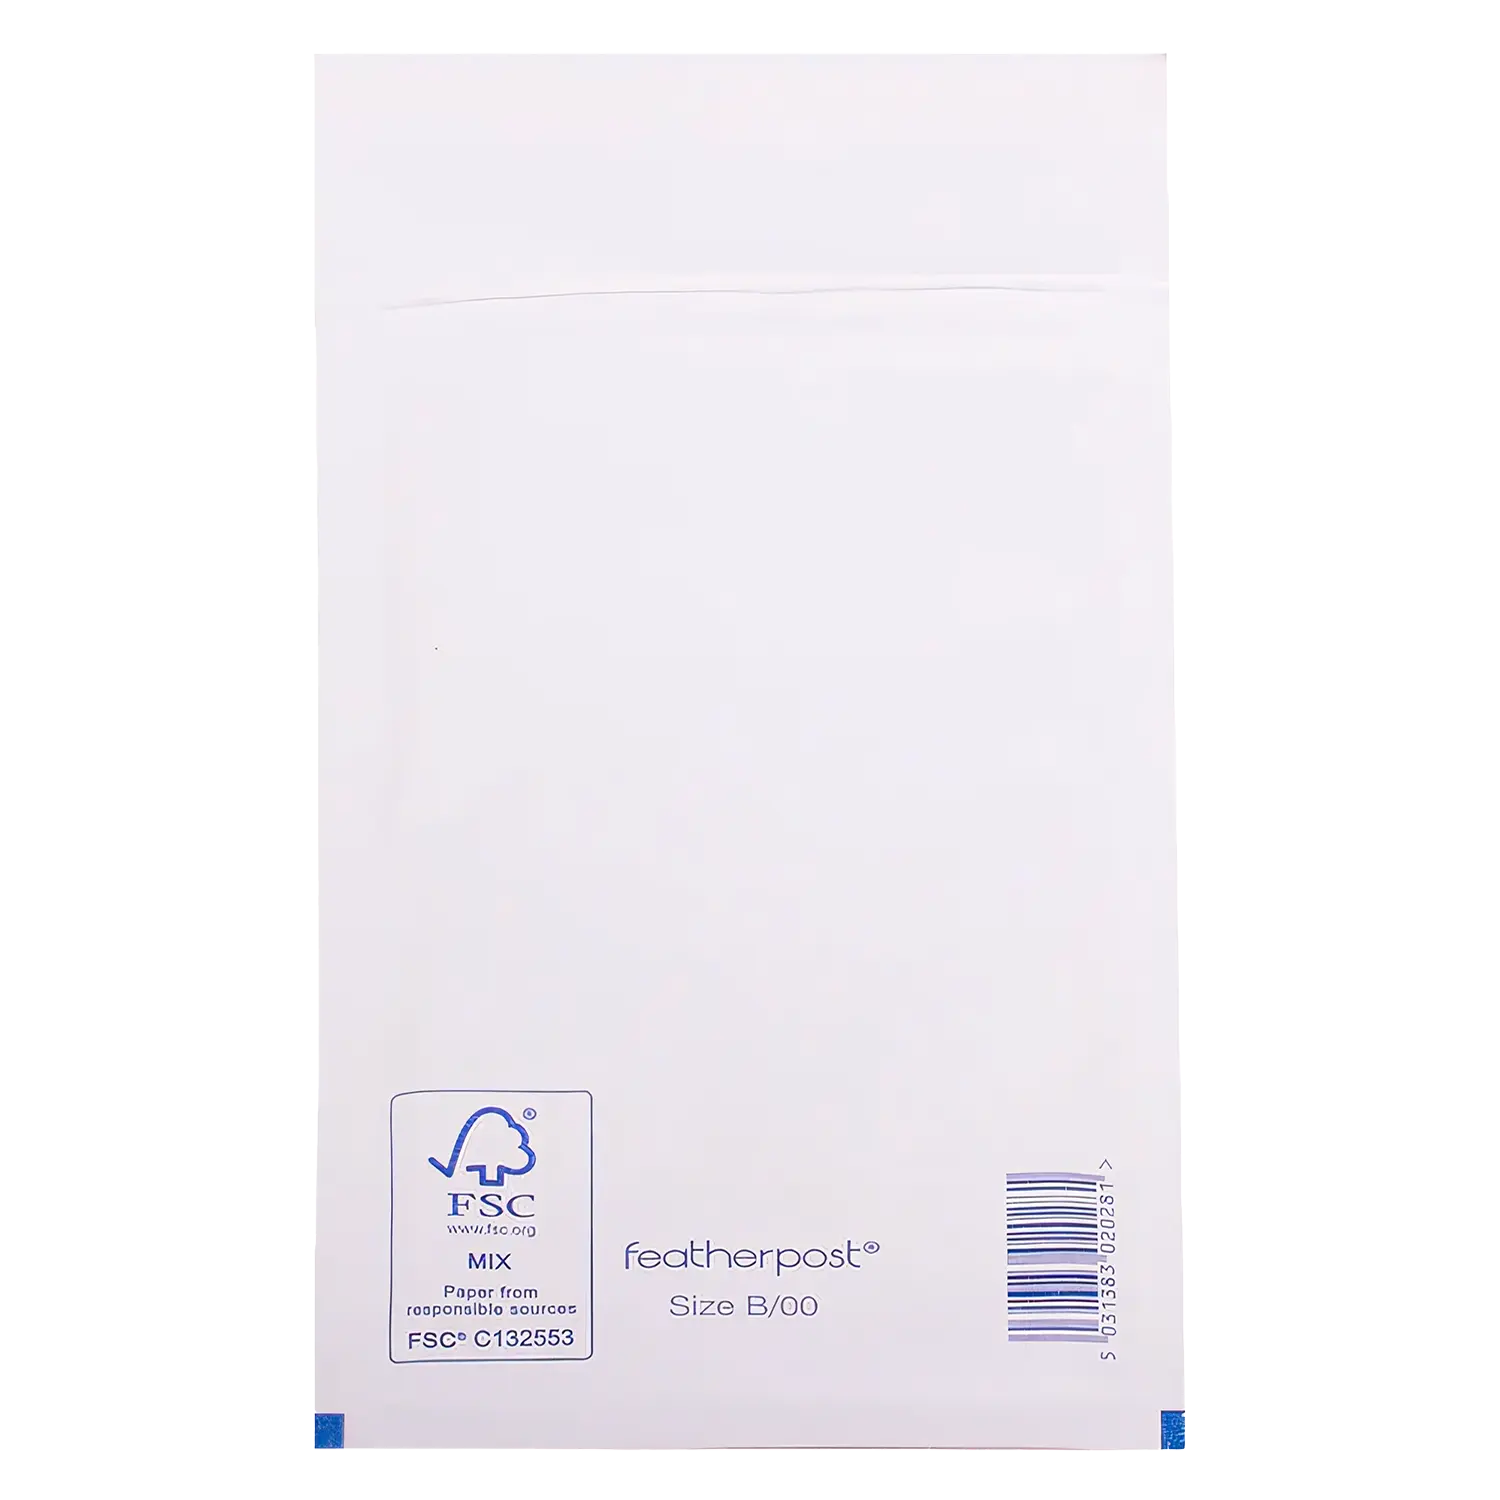 White Padded Bubble Envelopes Open - White Padded Bubble Envelopes - 120x215mm